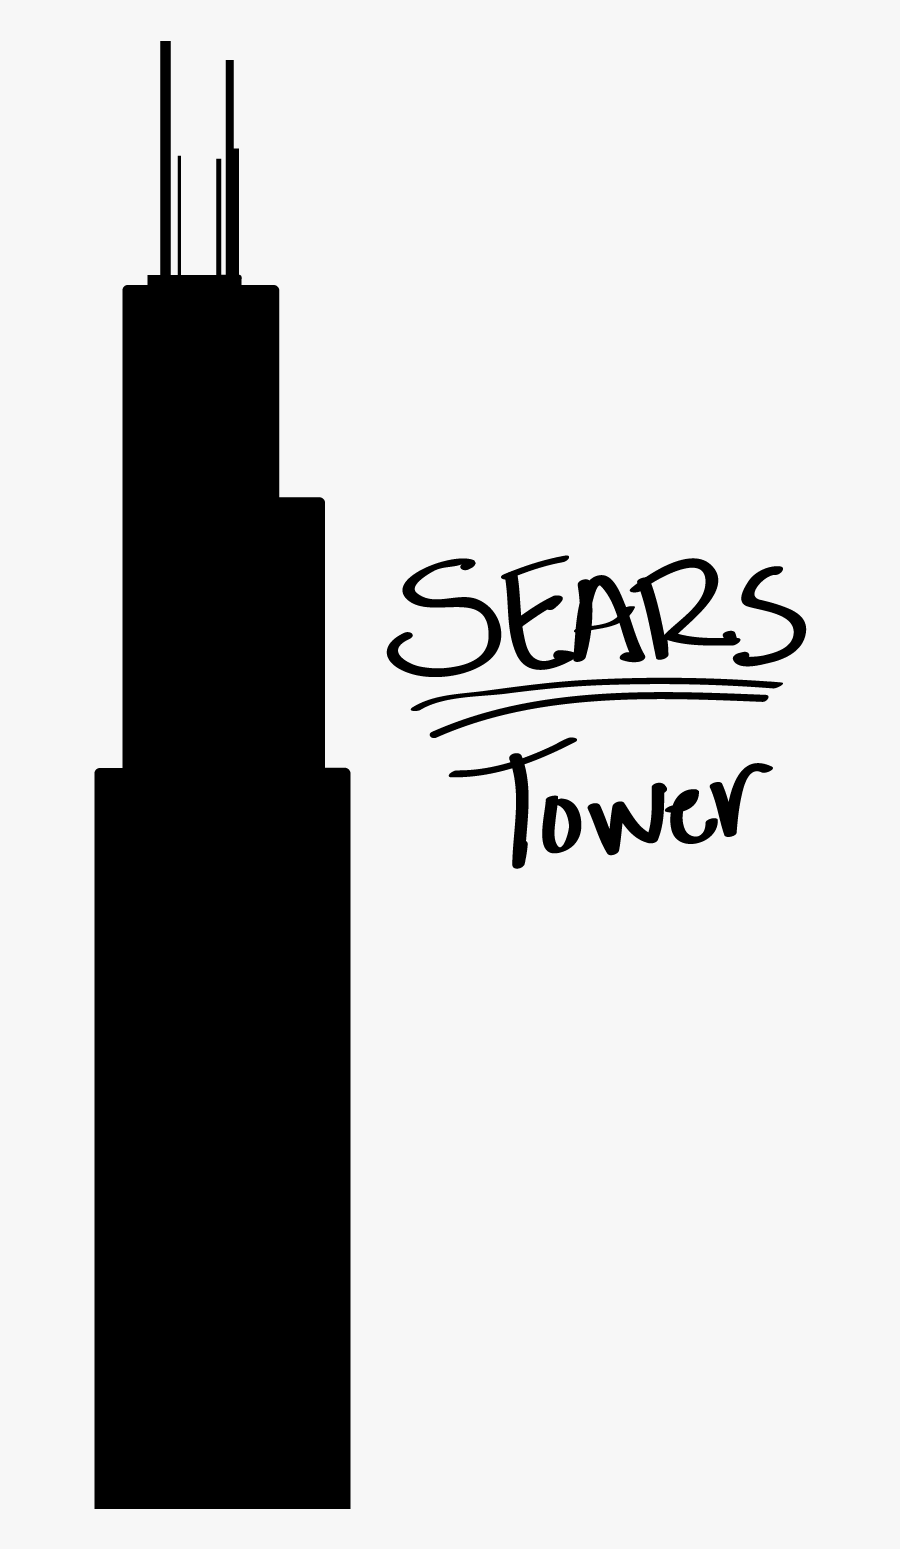 Evening Terrace, J 3363471152 - Sears Tower Illustration, Transparent Clipart